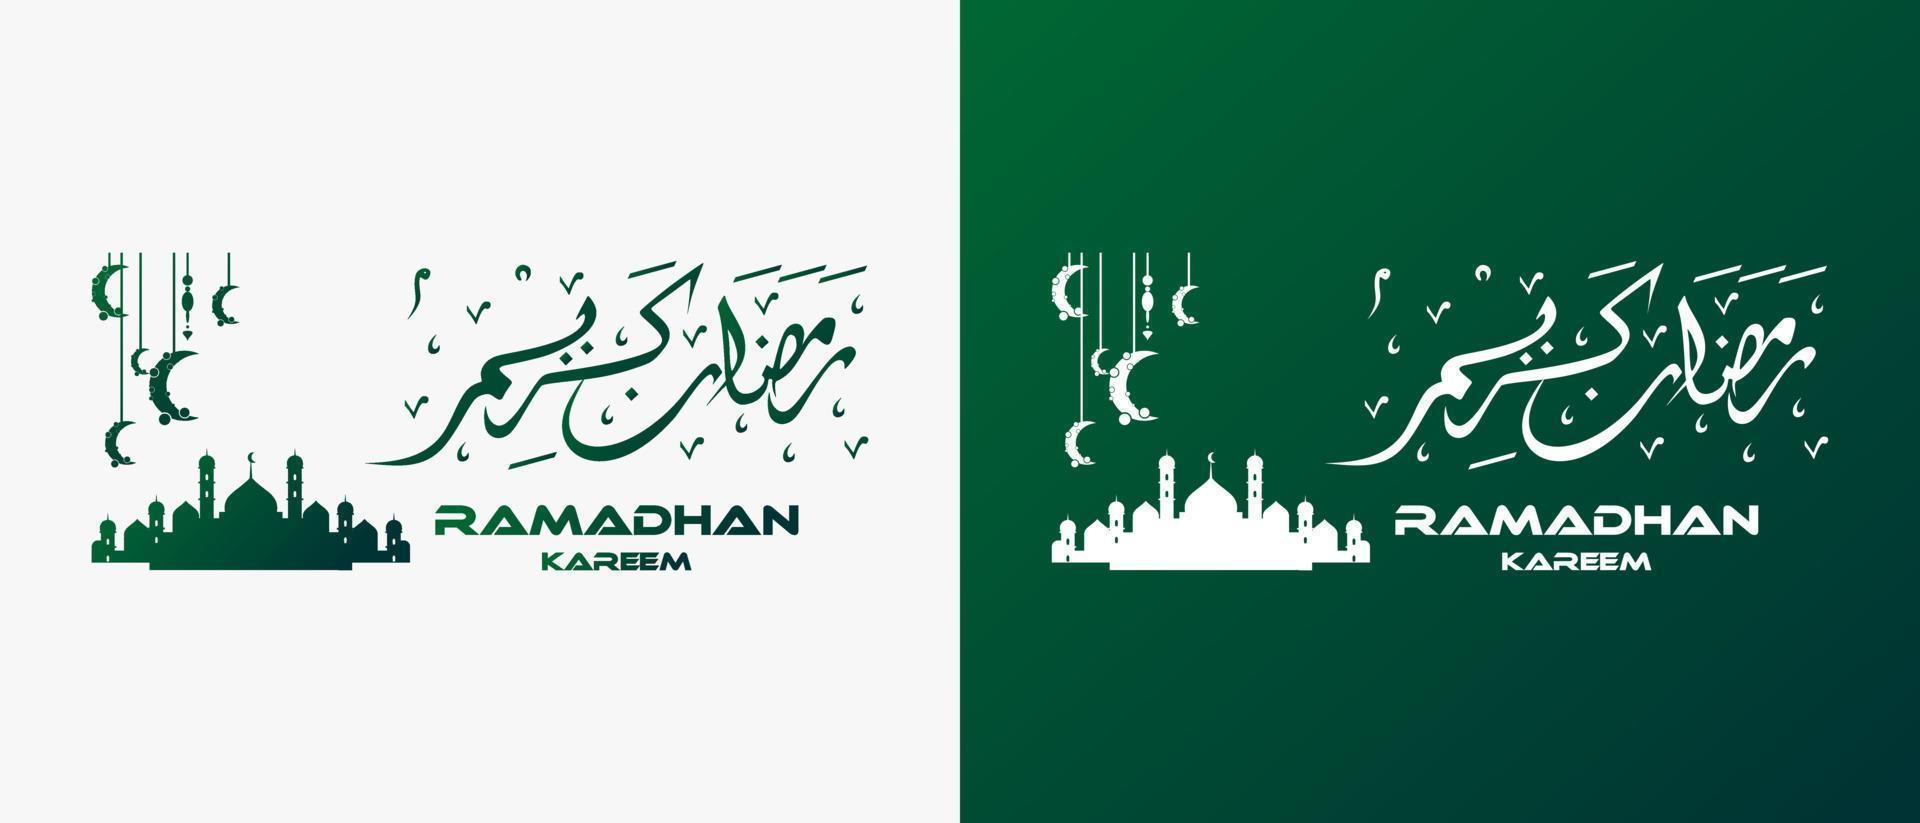 ramadan logo design template in creative concept with mosque and lantern elements. premium vector logo illustration